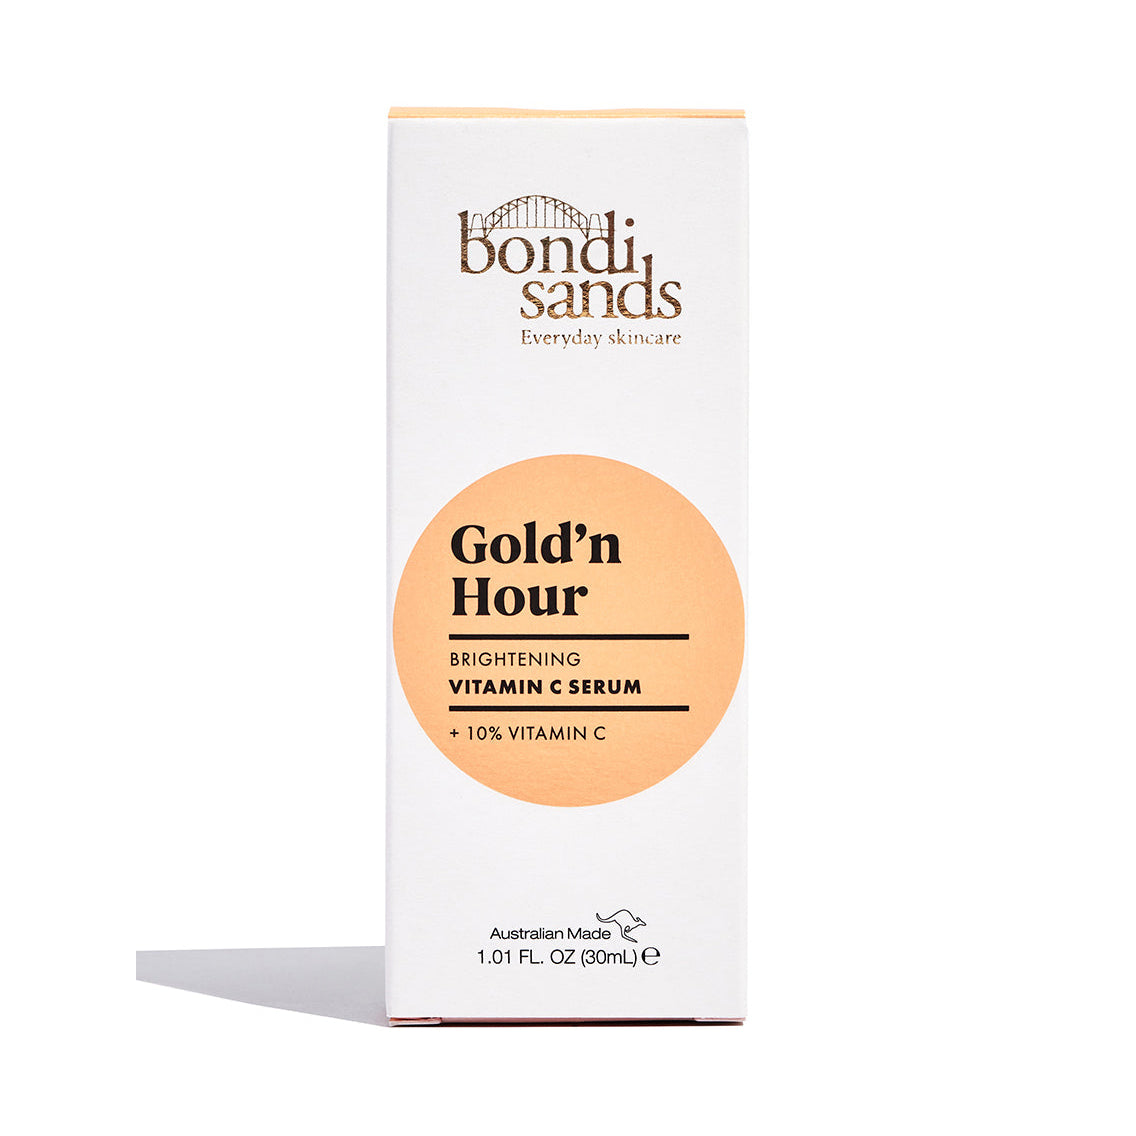 Bondi Sands Gold'n Hour Vitamin C Serum (30ml) packaging